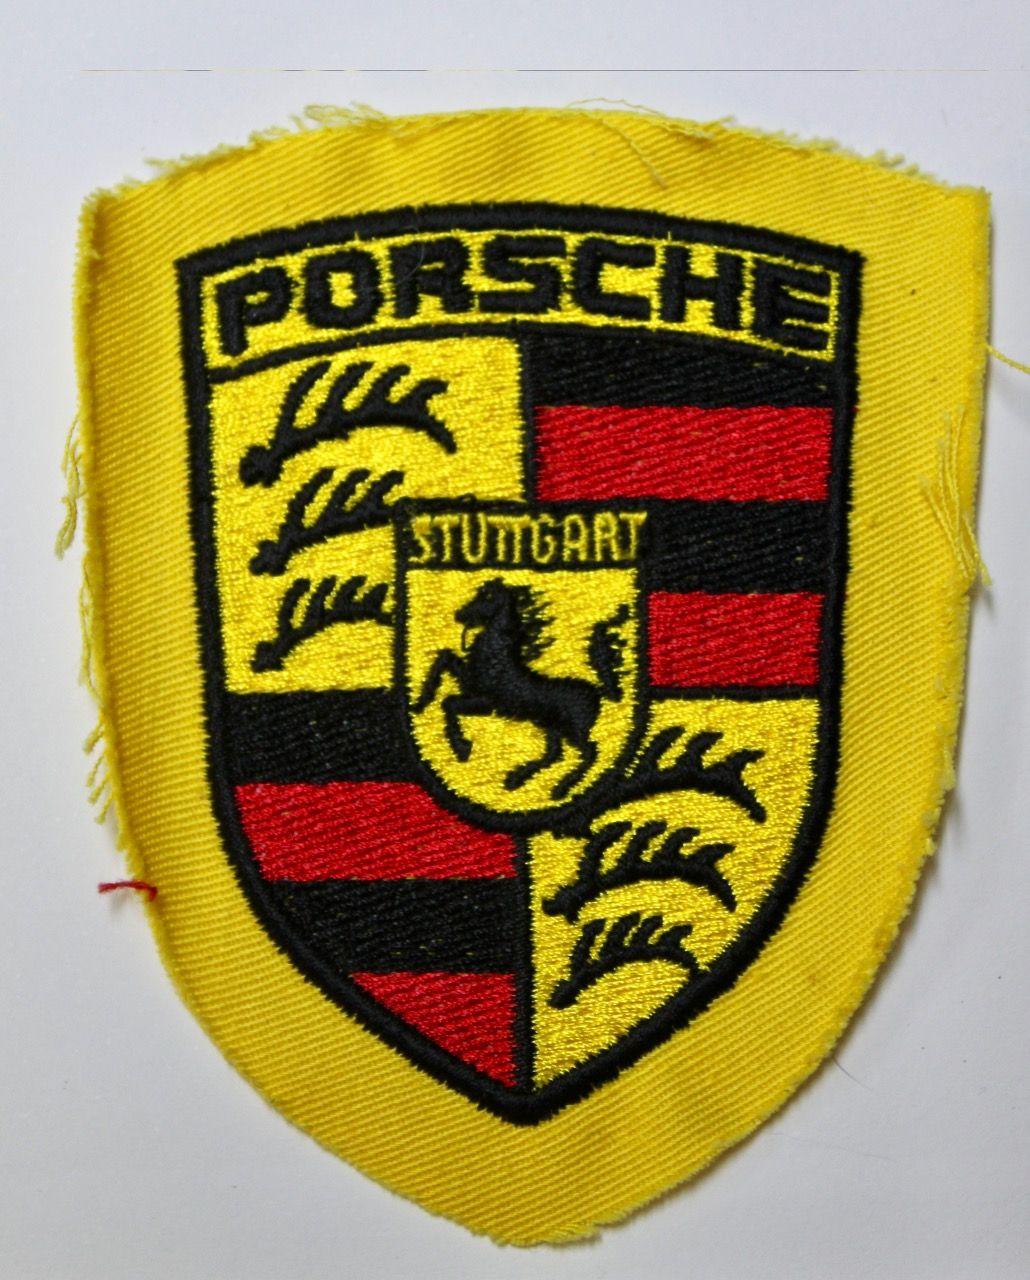 Vintage Porsche Logo - Vintage Porsche patch